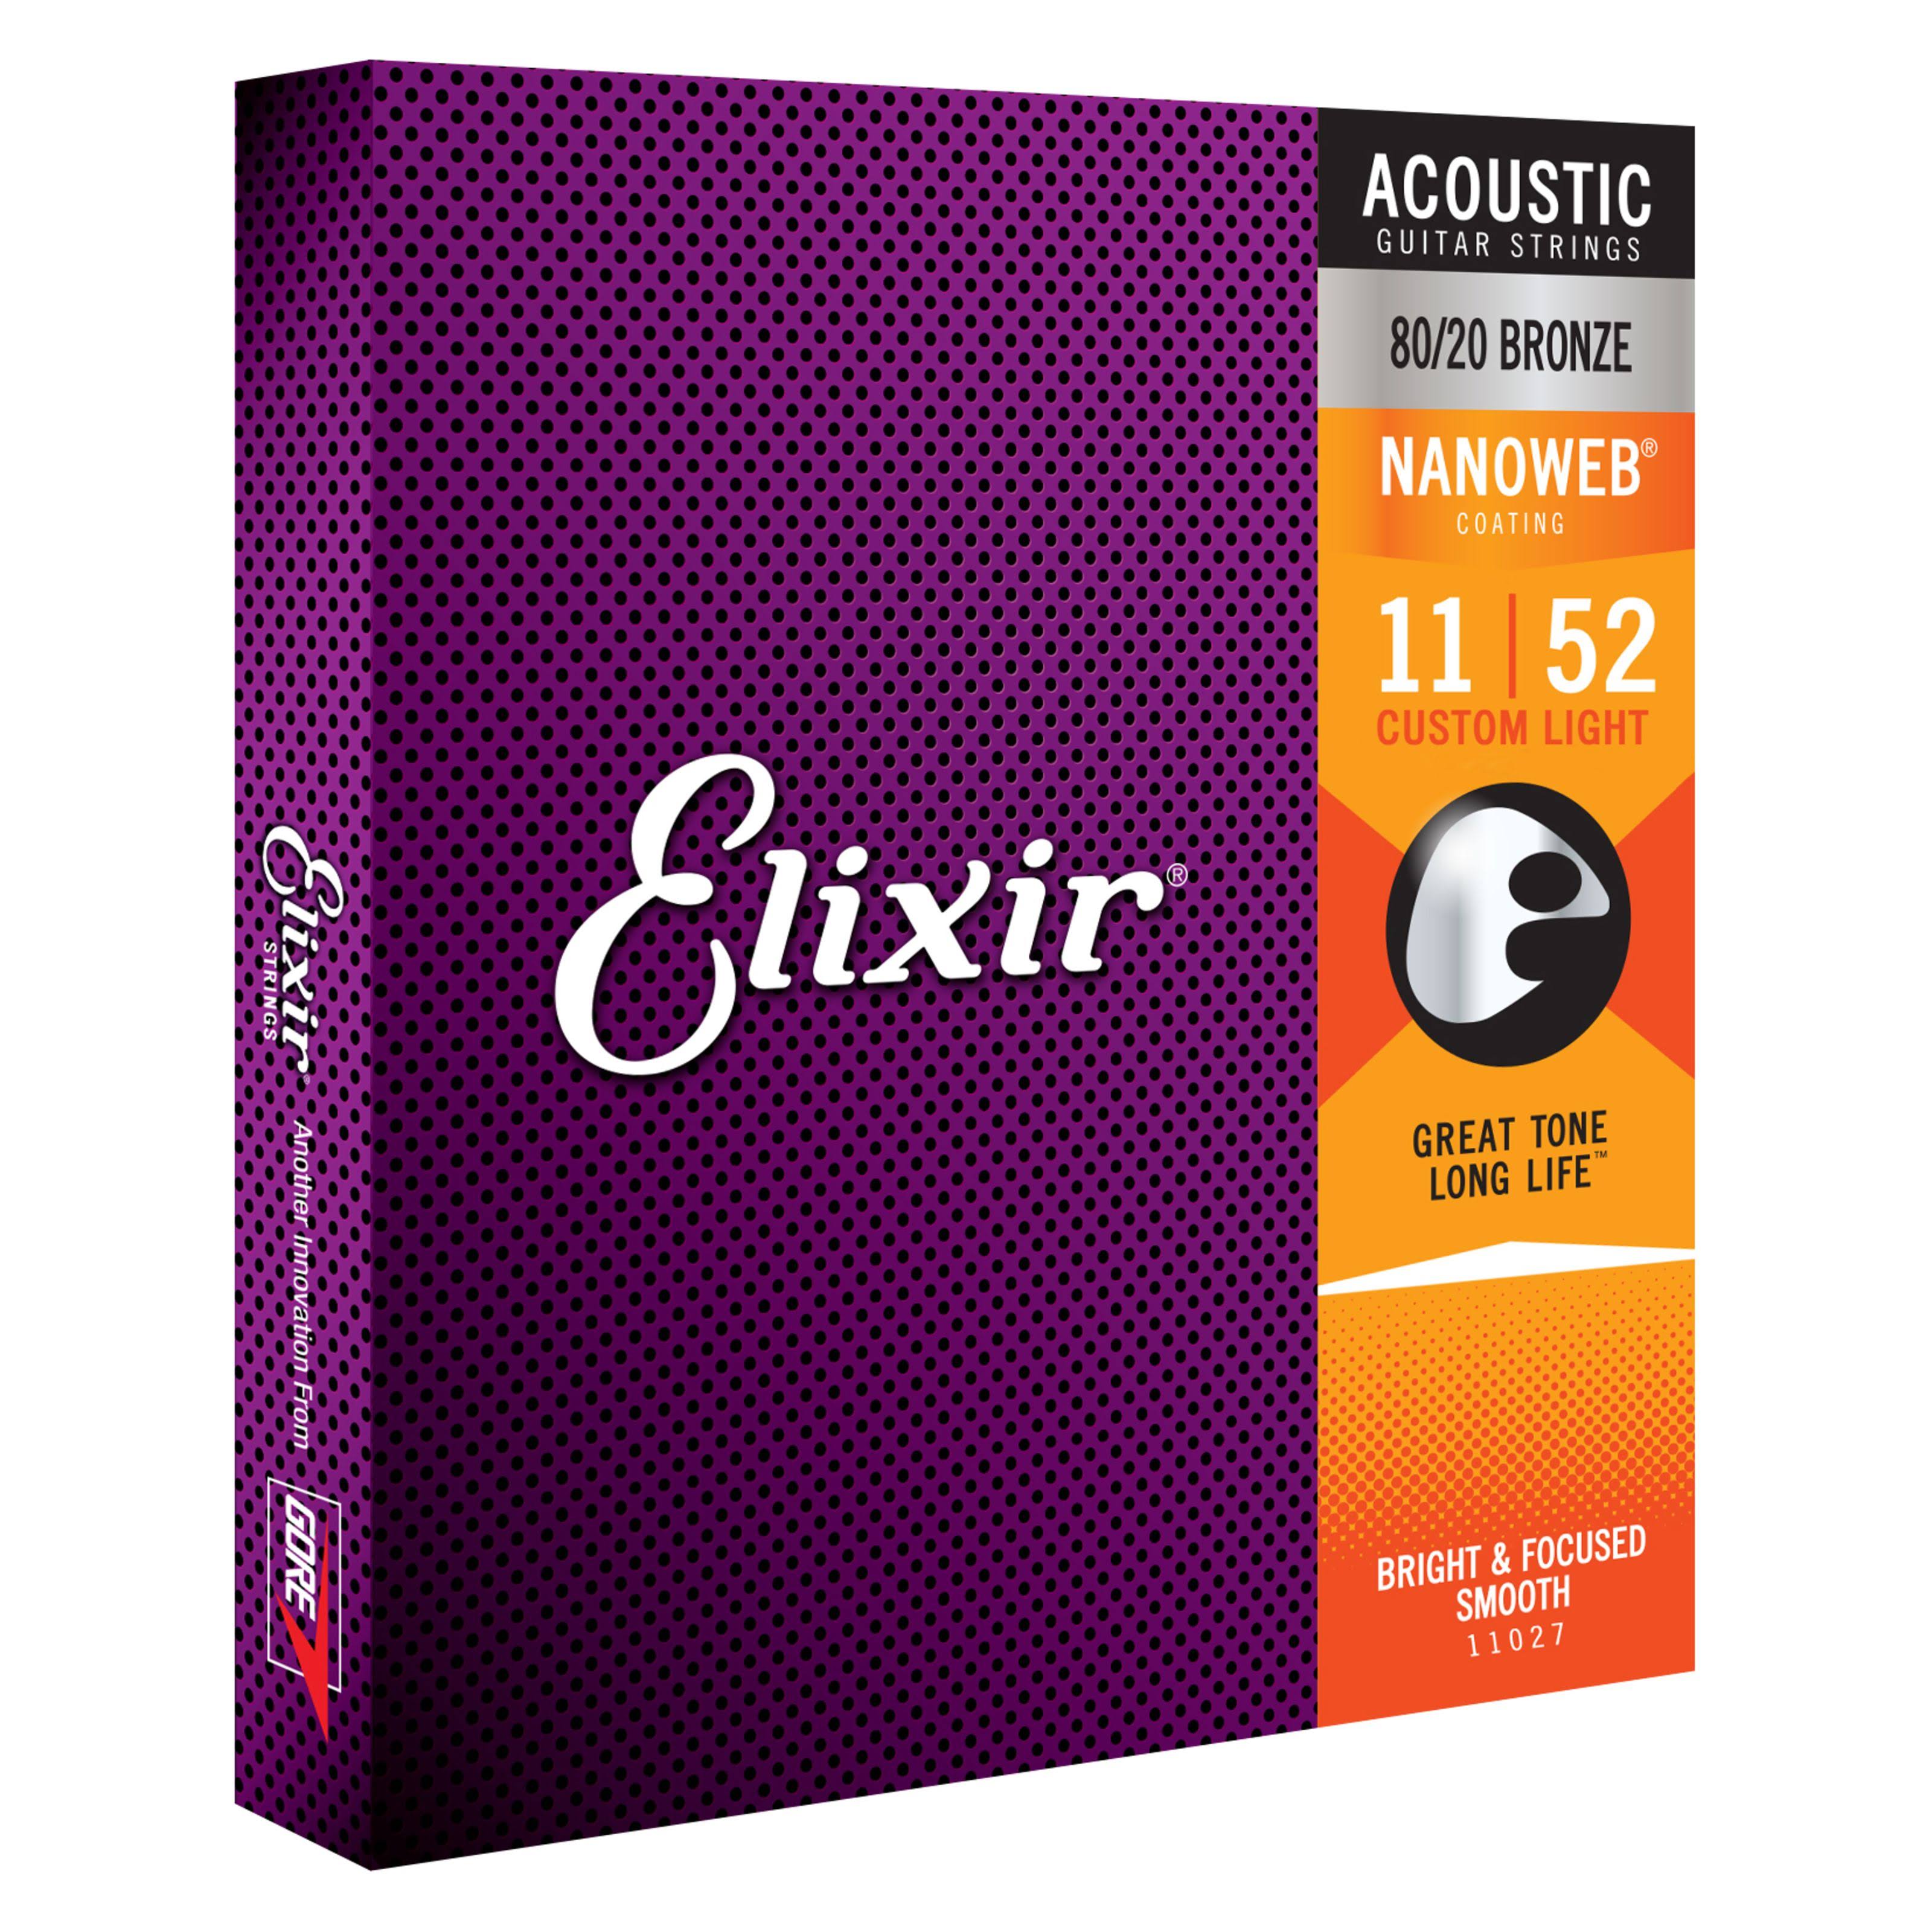 Elixir Strings Acoustic 80/20 Bronze Guitar Strings - Custom Light Gauge